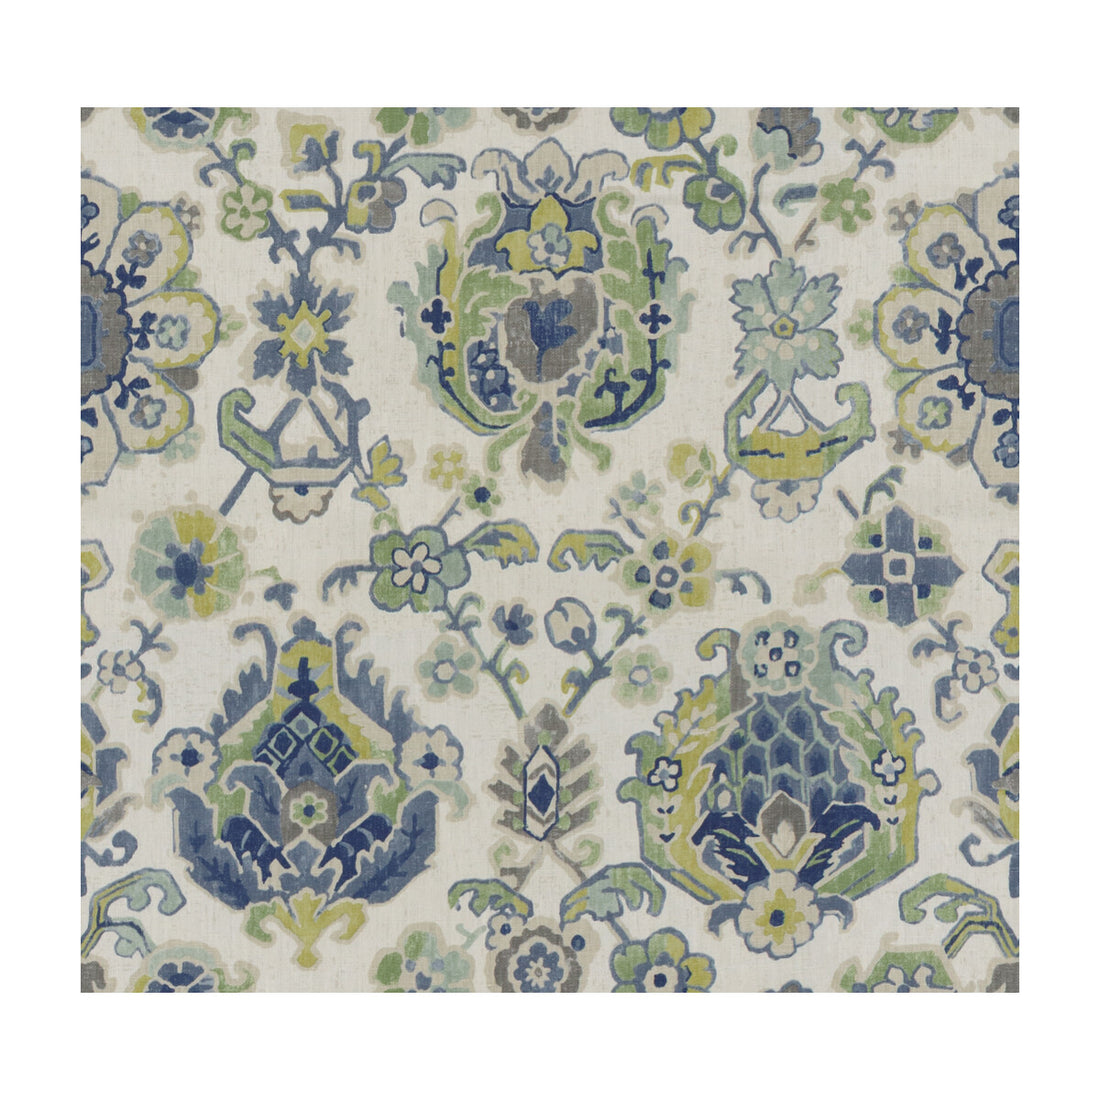 Saroukrug fabric in ultramarine color - pattern SAROUKRUG.523.0 - by Kravet Basics in the Sarah Richardson Harmony collection